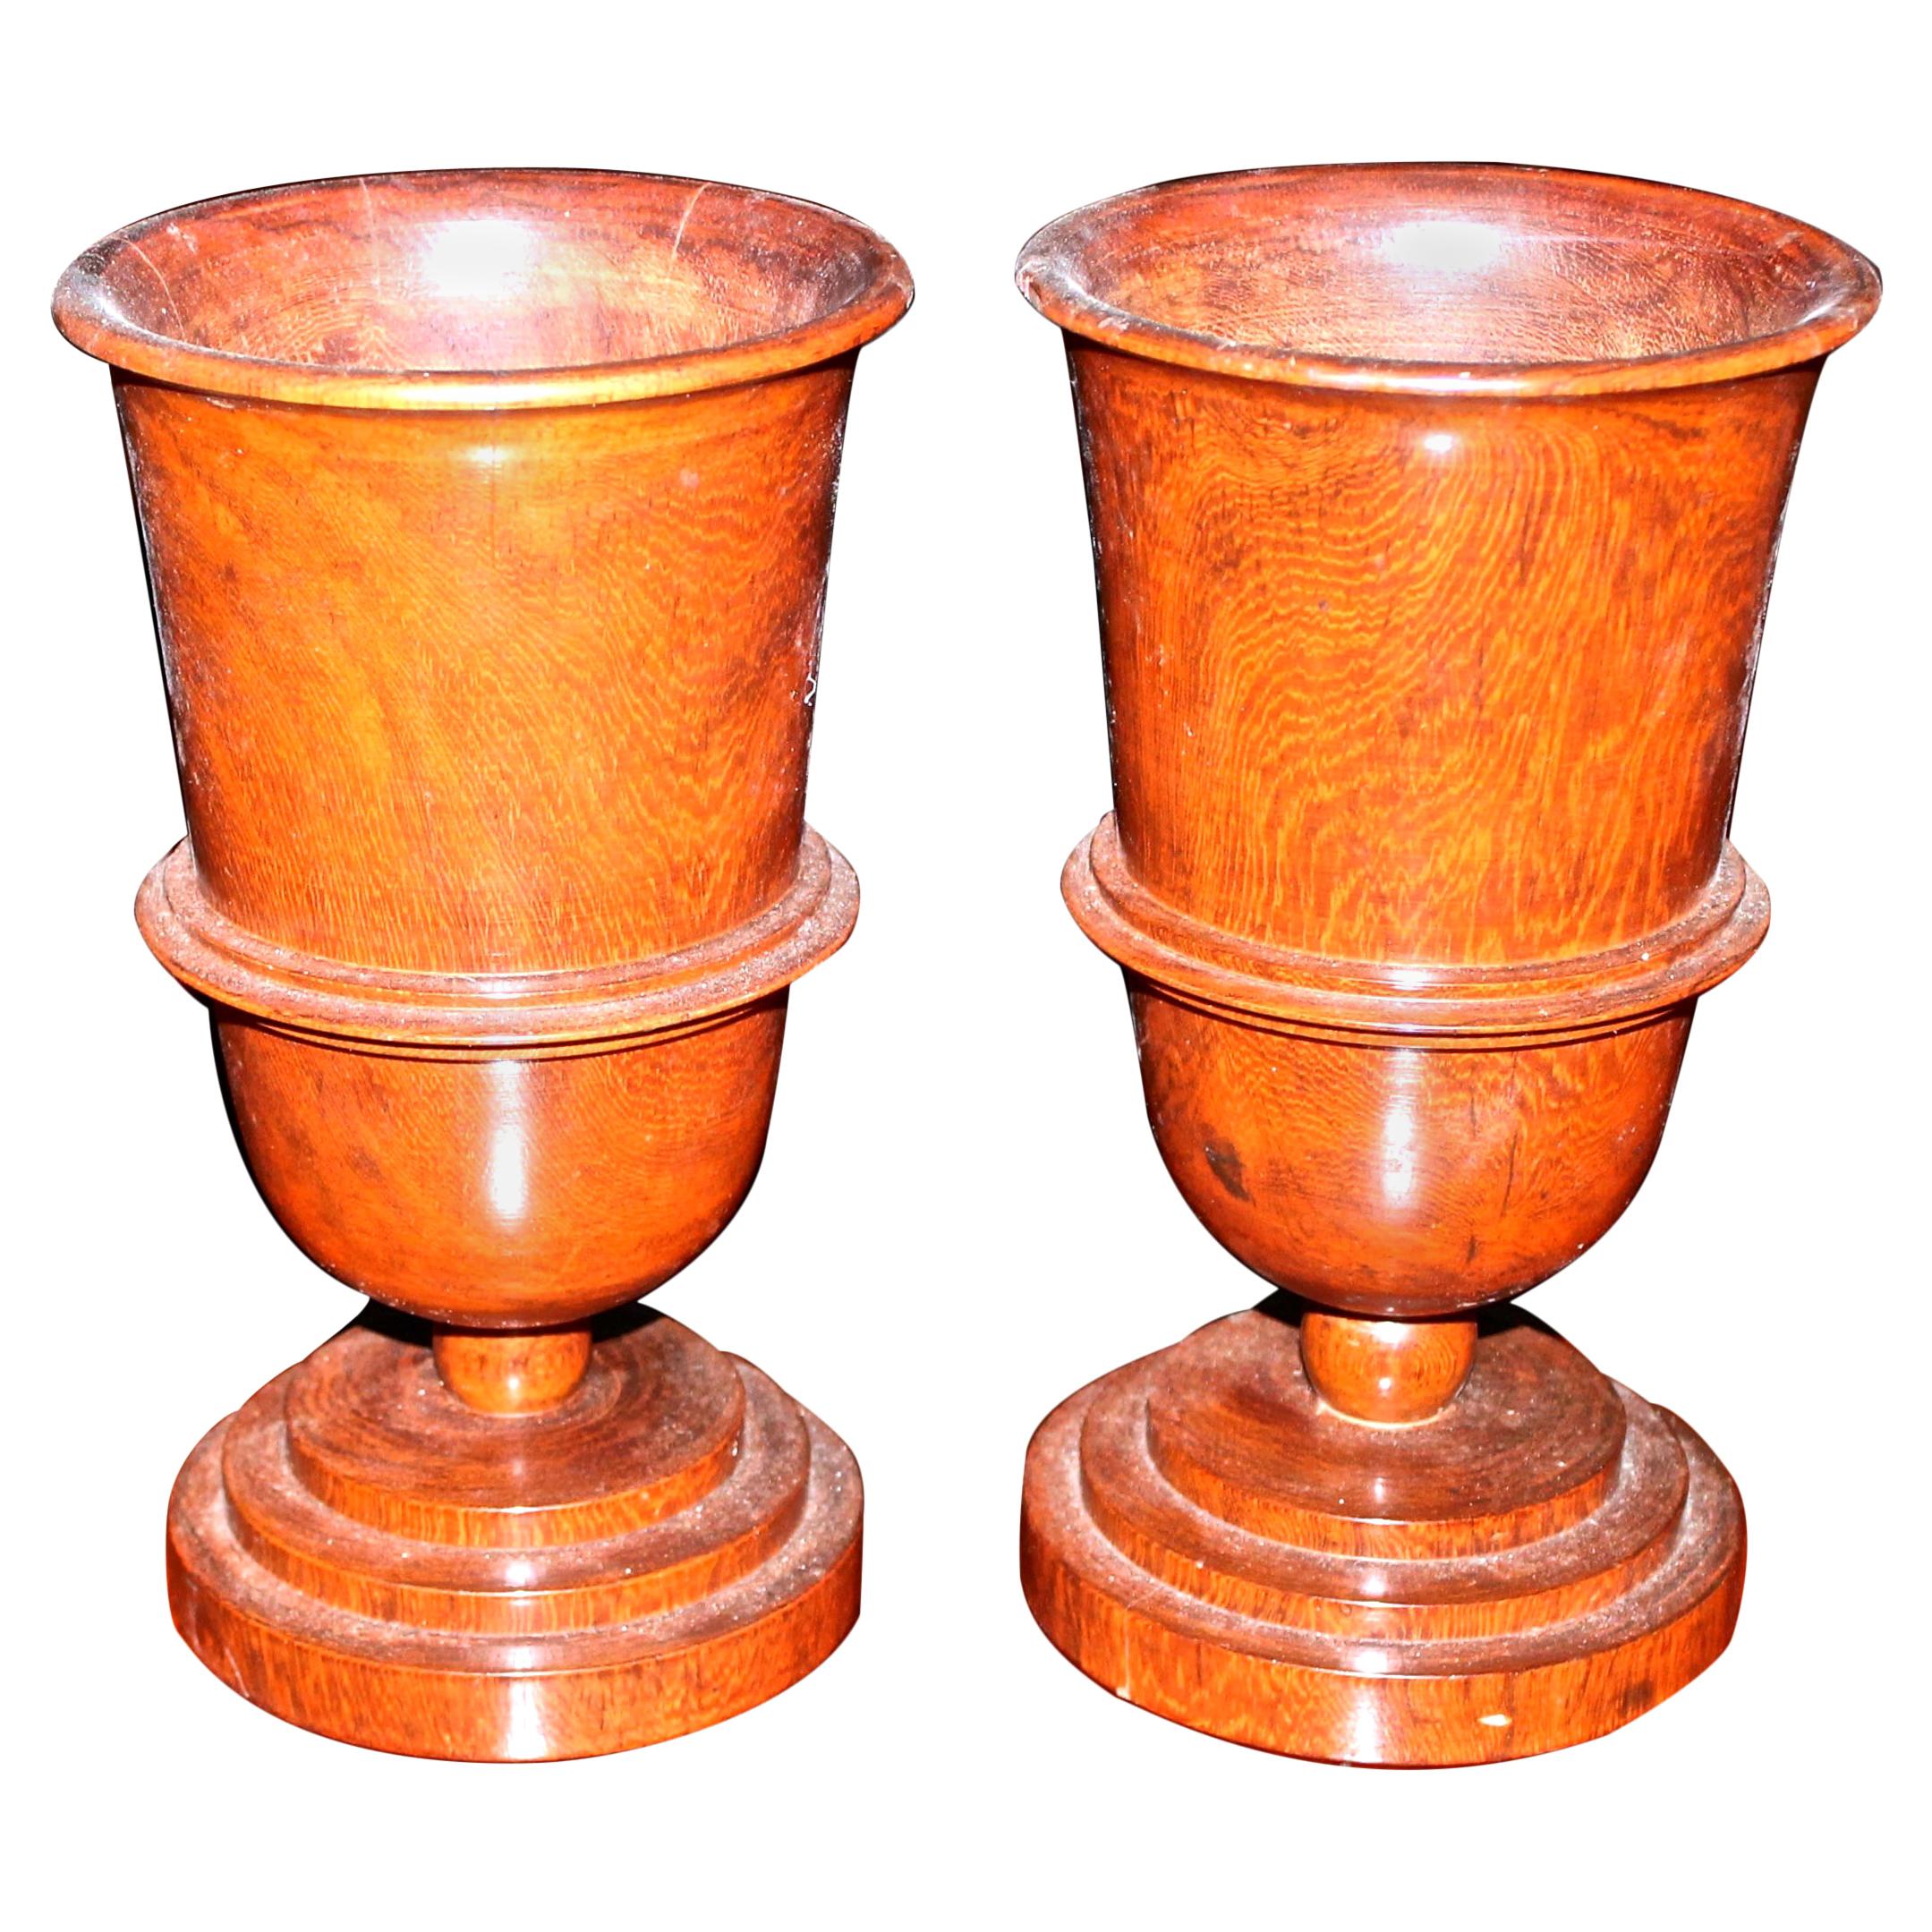 Pair of German Art Deco Treen Ware Urns For Sale